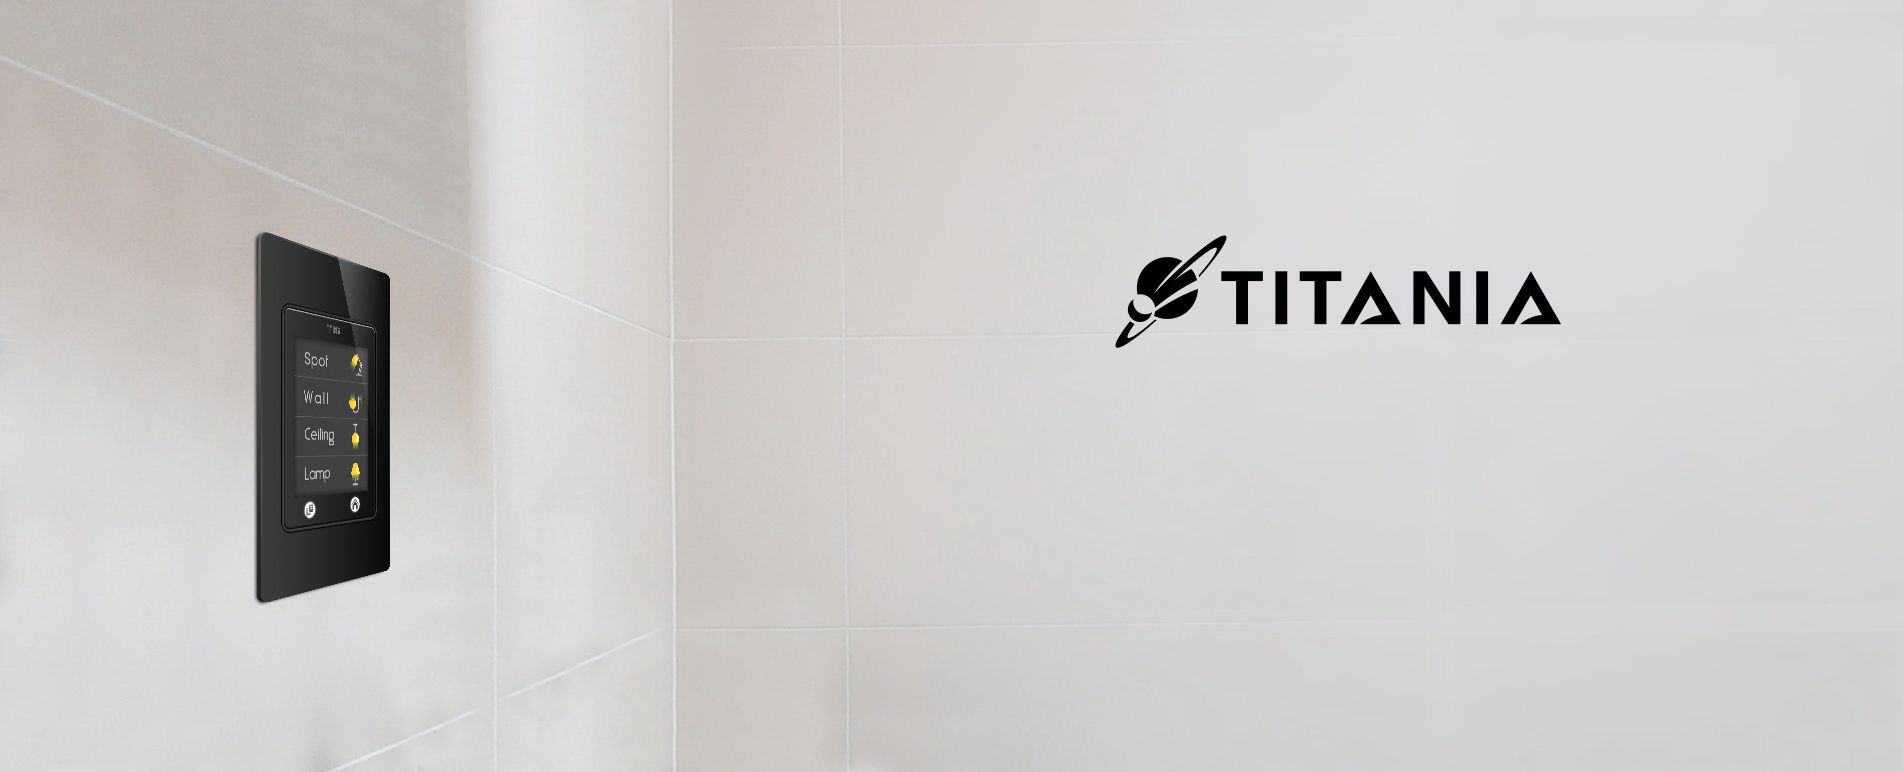 titan and titania